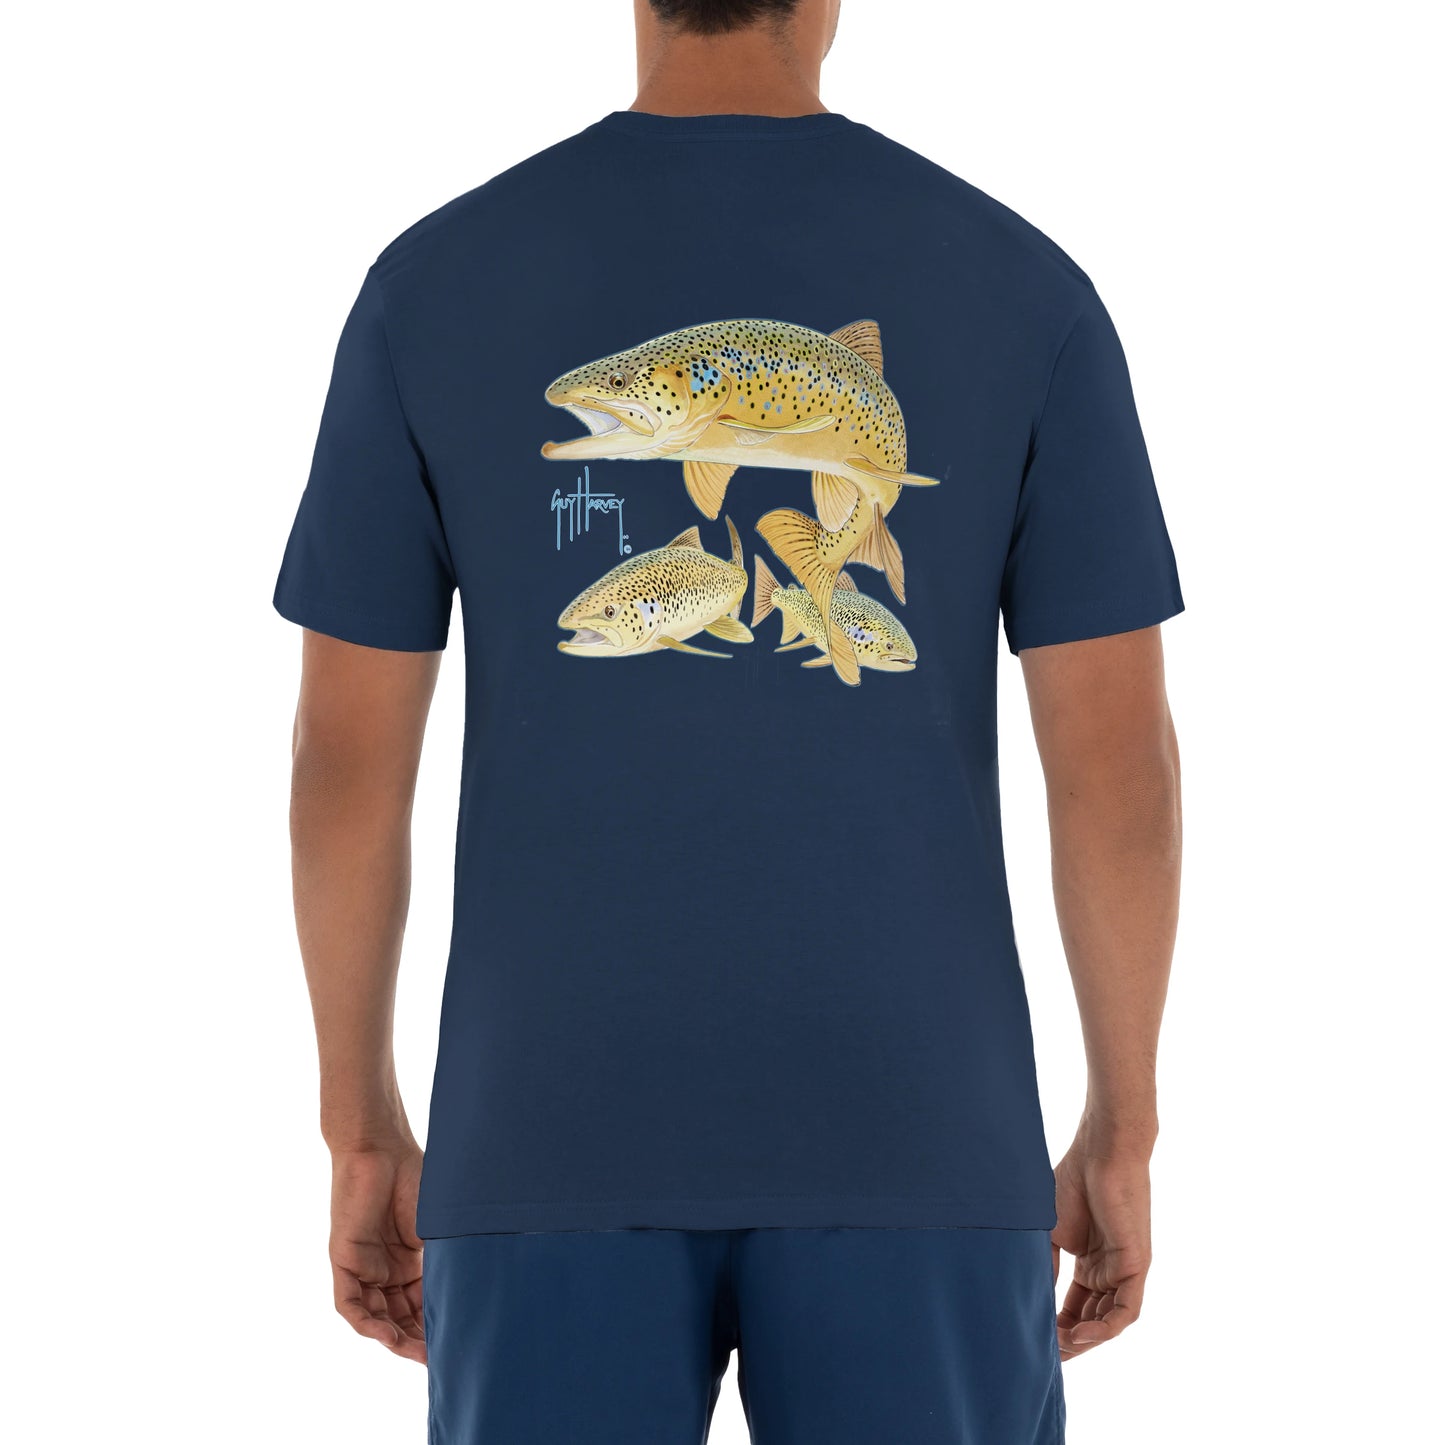 Men's EB Mountain Fish Graphic T-Shirt